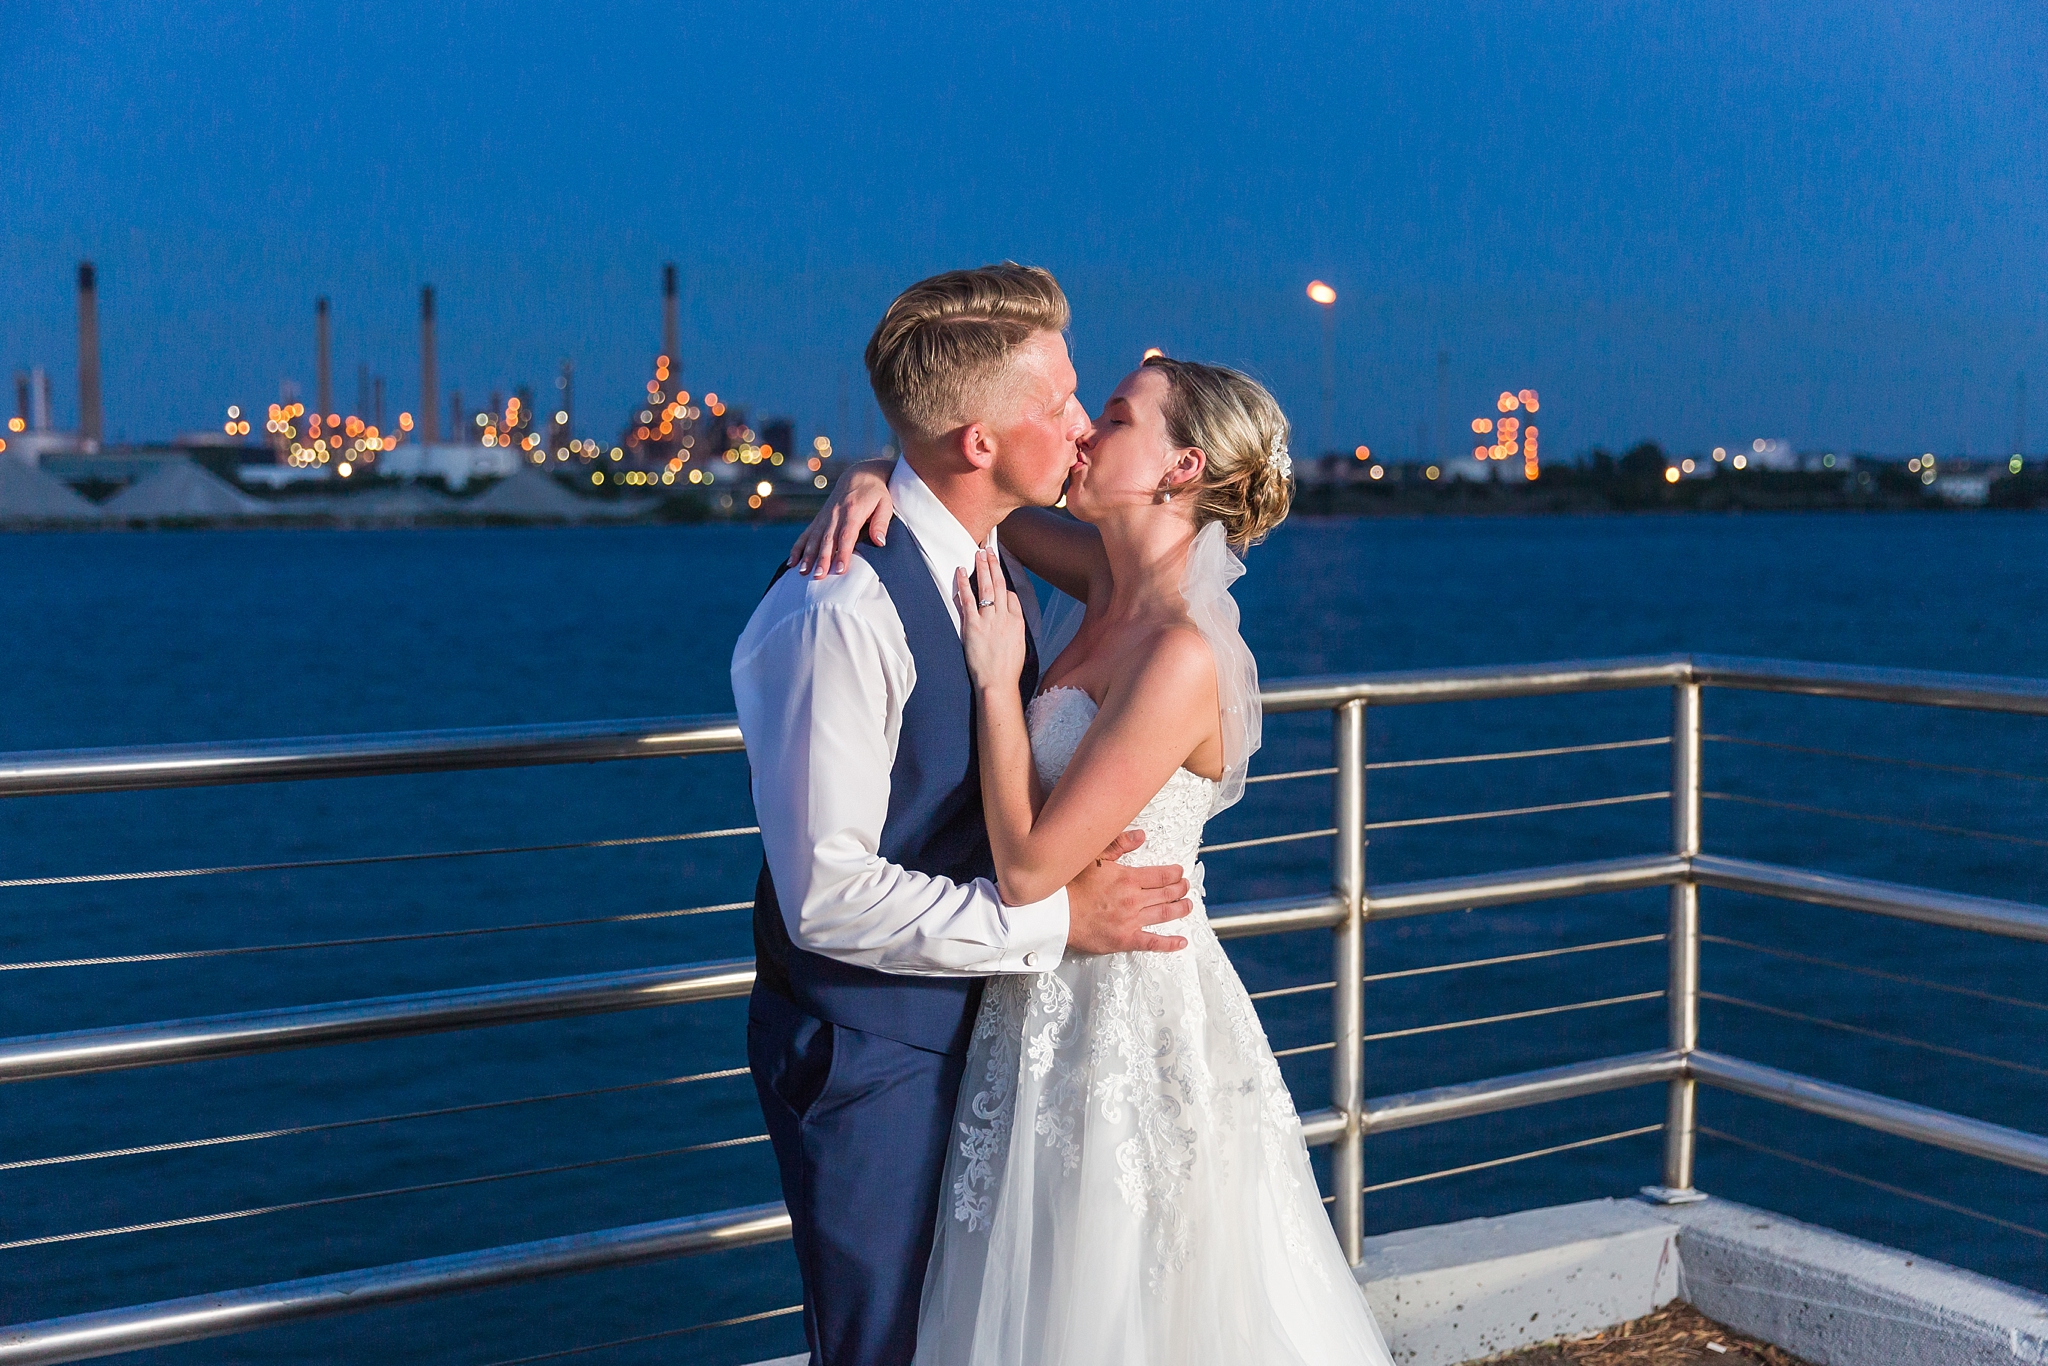 fun-nautical-wedding-photos-at-the-bean-dock-in-downtown-port-huron-michigan-by-courtney-carolyn-photography_0115.jpg